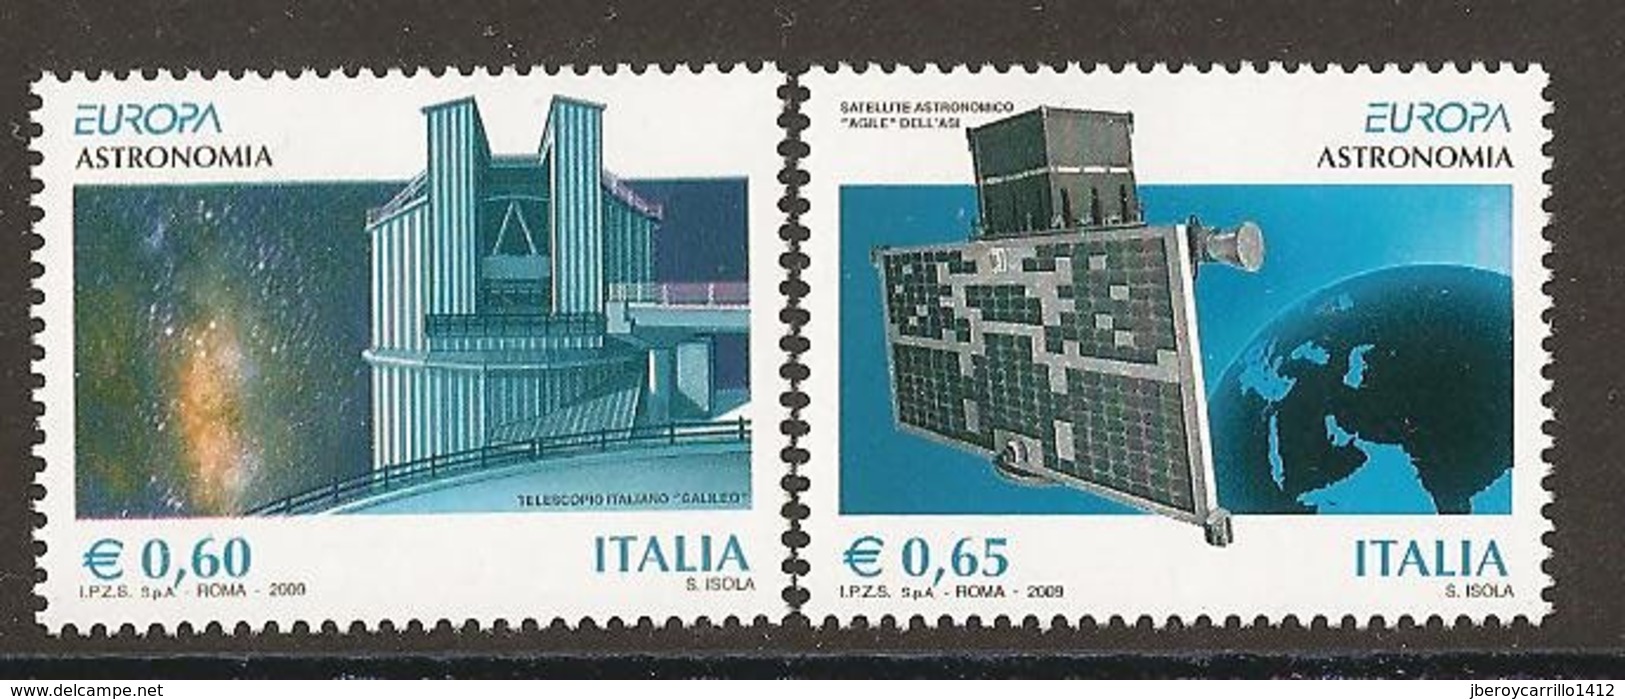 ITALIA / ITALY /ITALIEN / ITALE- EUROPA 2009 - TEMA "ASTRONOMIA" - SET Of 2 Stamps PERFORATED - 2009